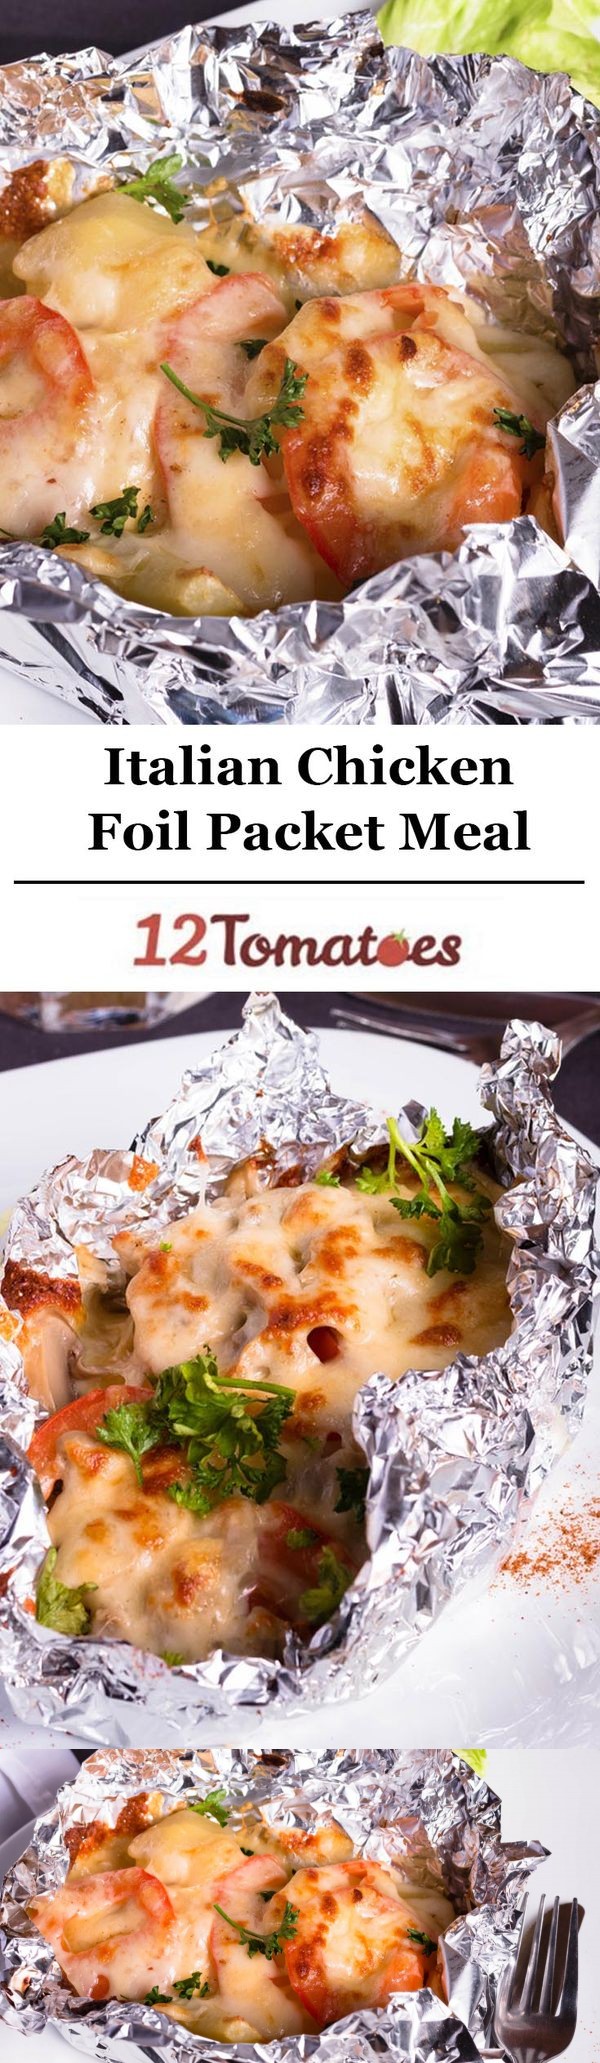 Italian Chicken Foil Packet